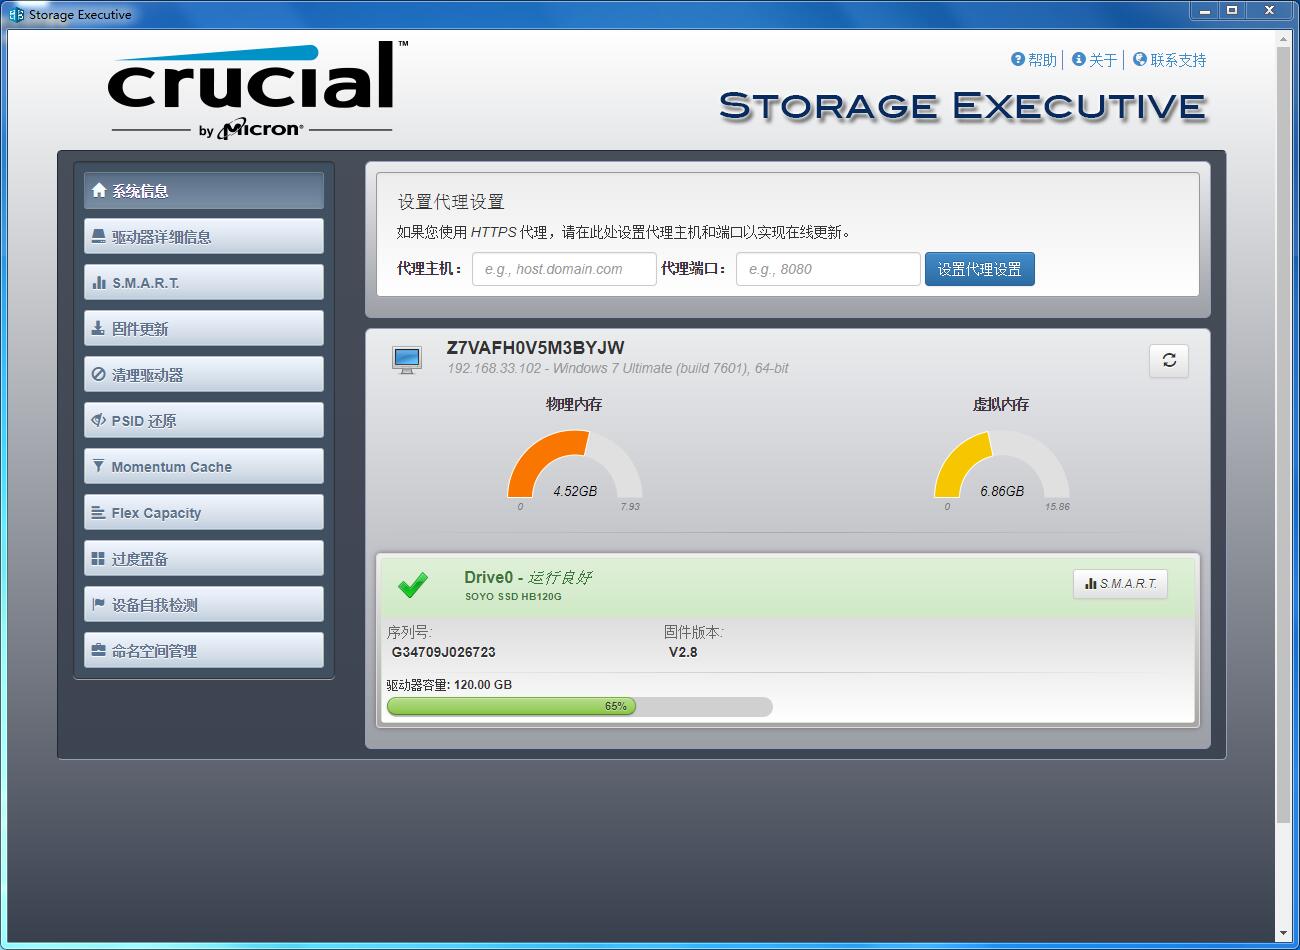 how to optimize crucial storage executive